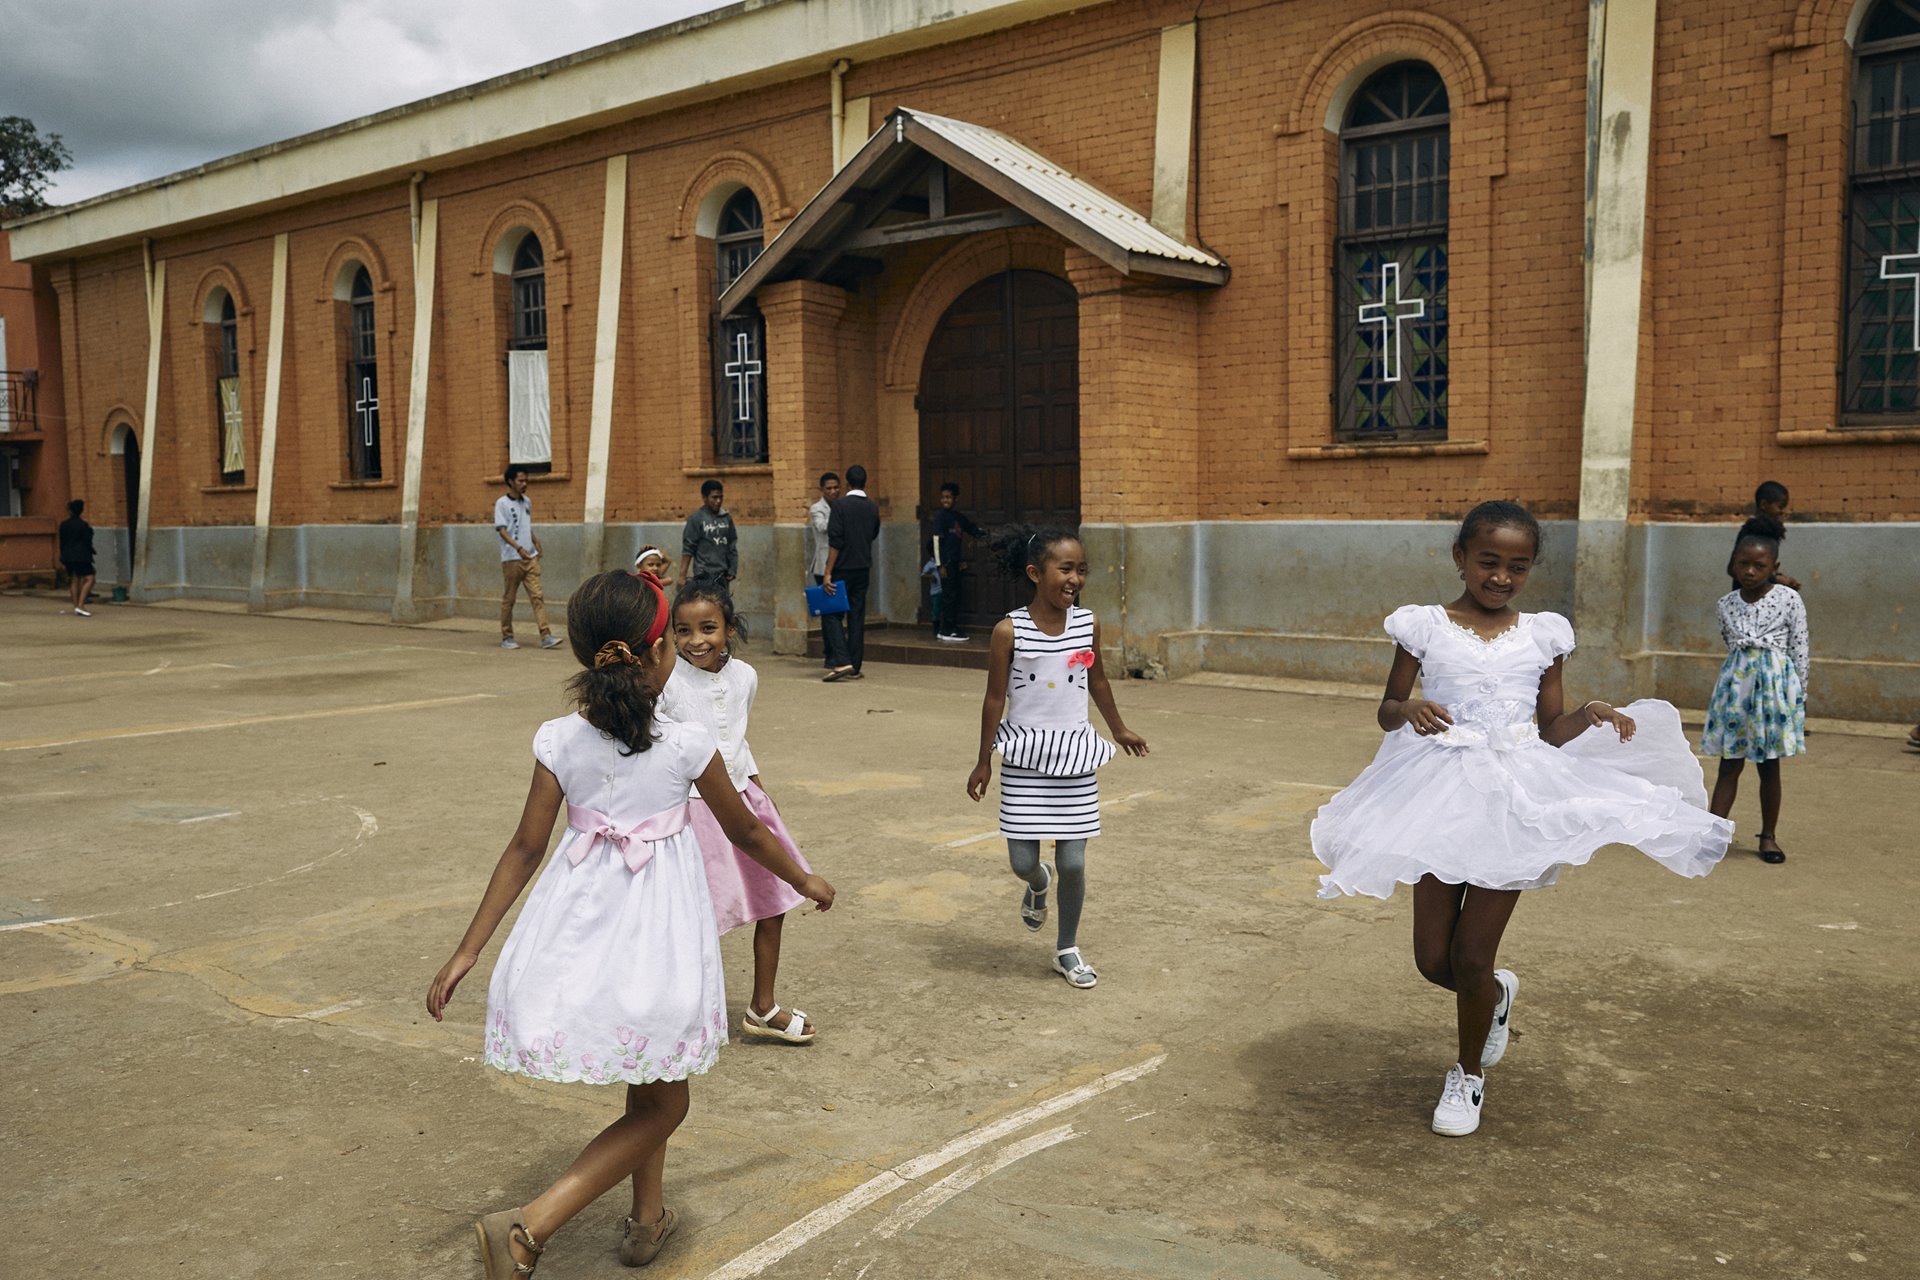 Children play outside the church during the Sunday morning service at the Roman Catholic Church in Mandrosoa Ivato, Antananarivo, Madagascar.